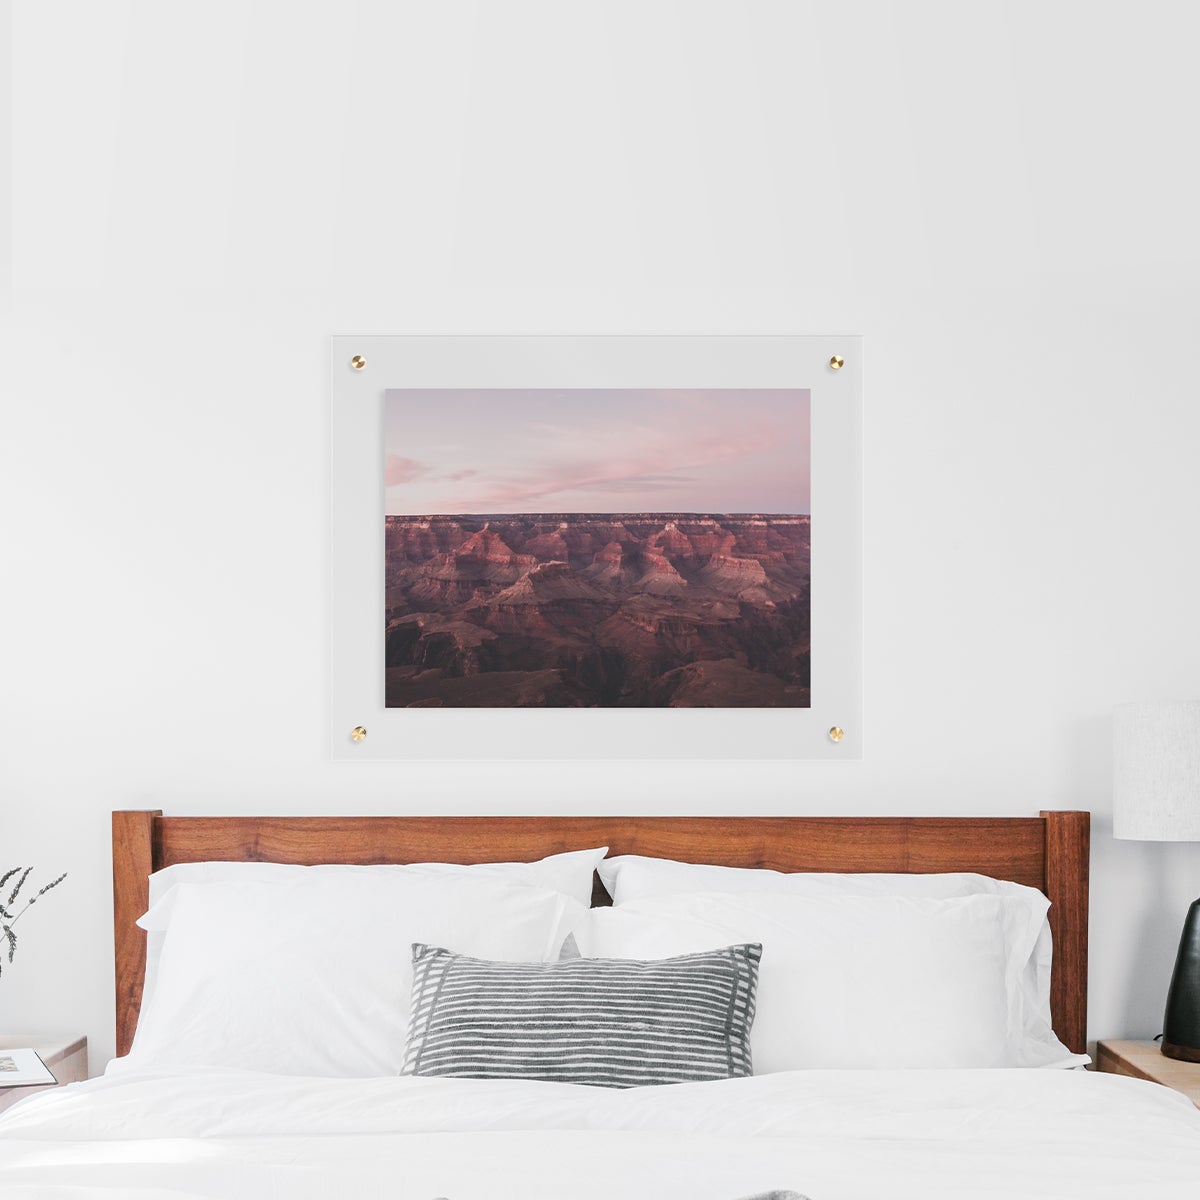 Floating frame with desert landscape hanging above white bed